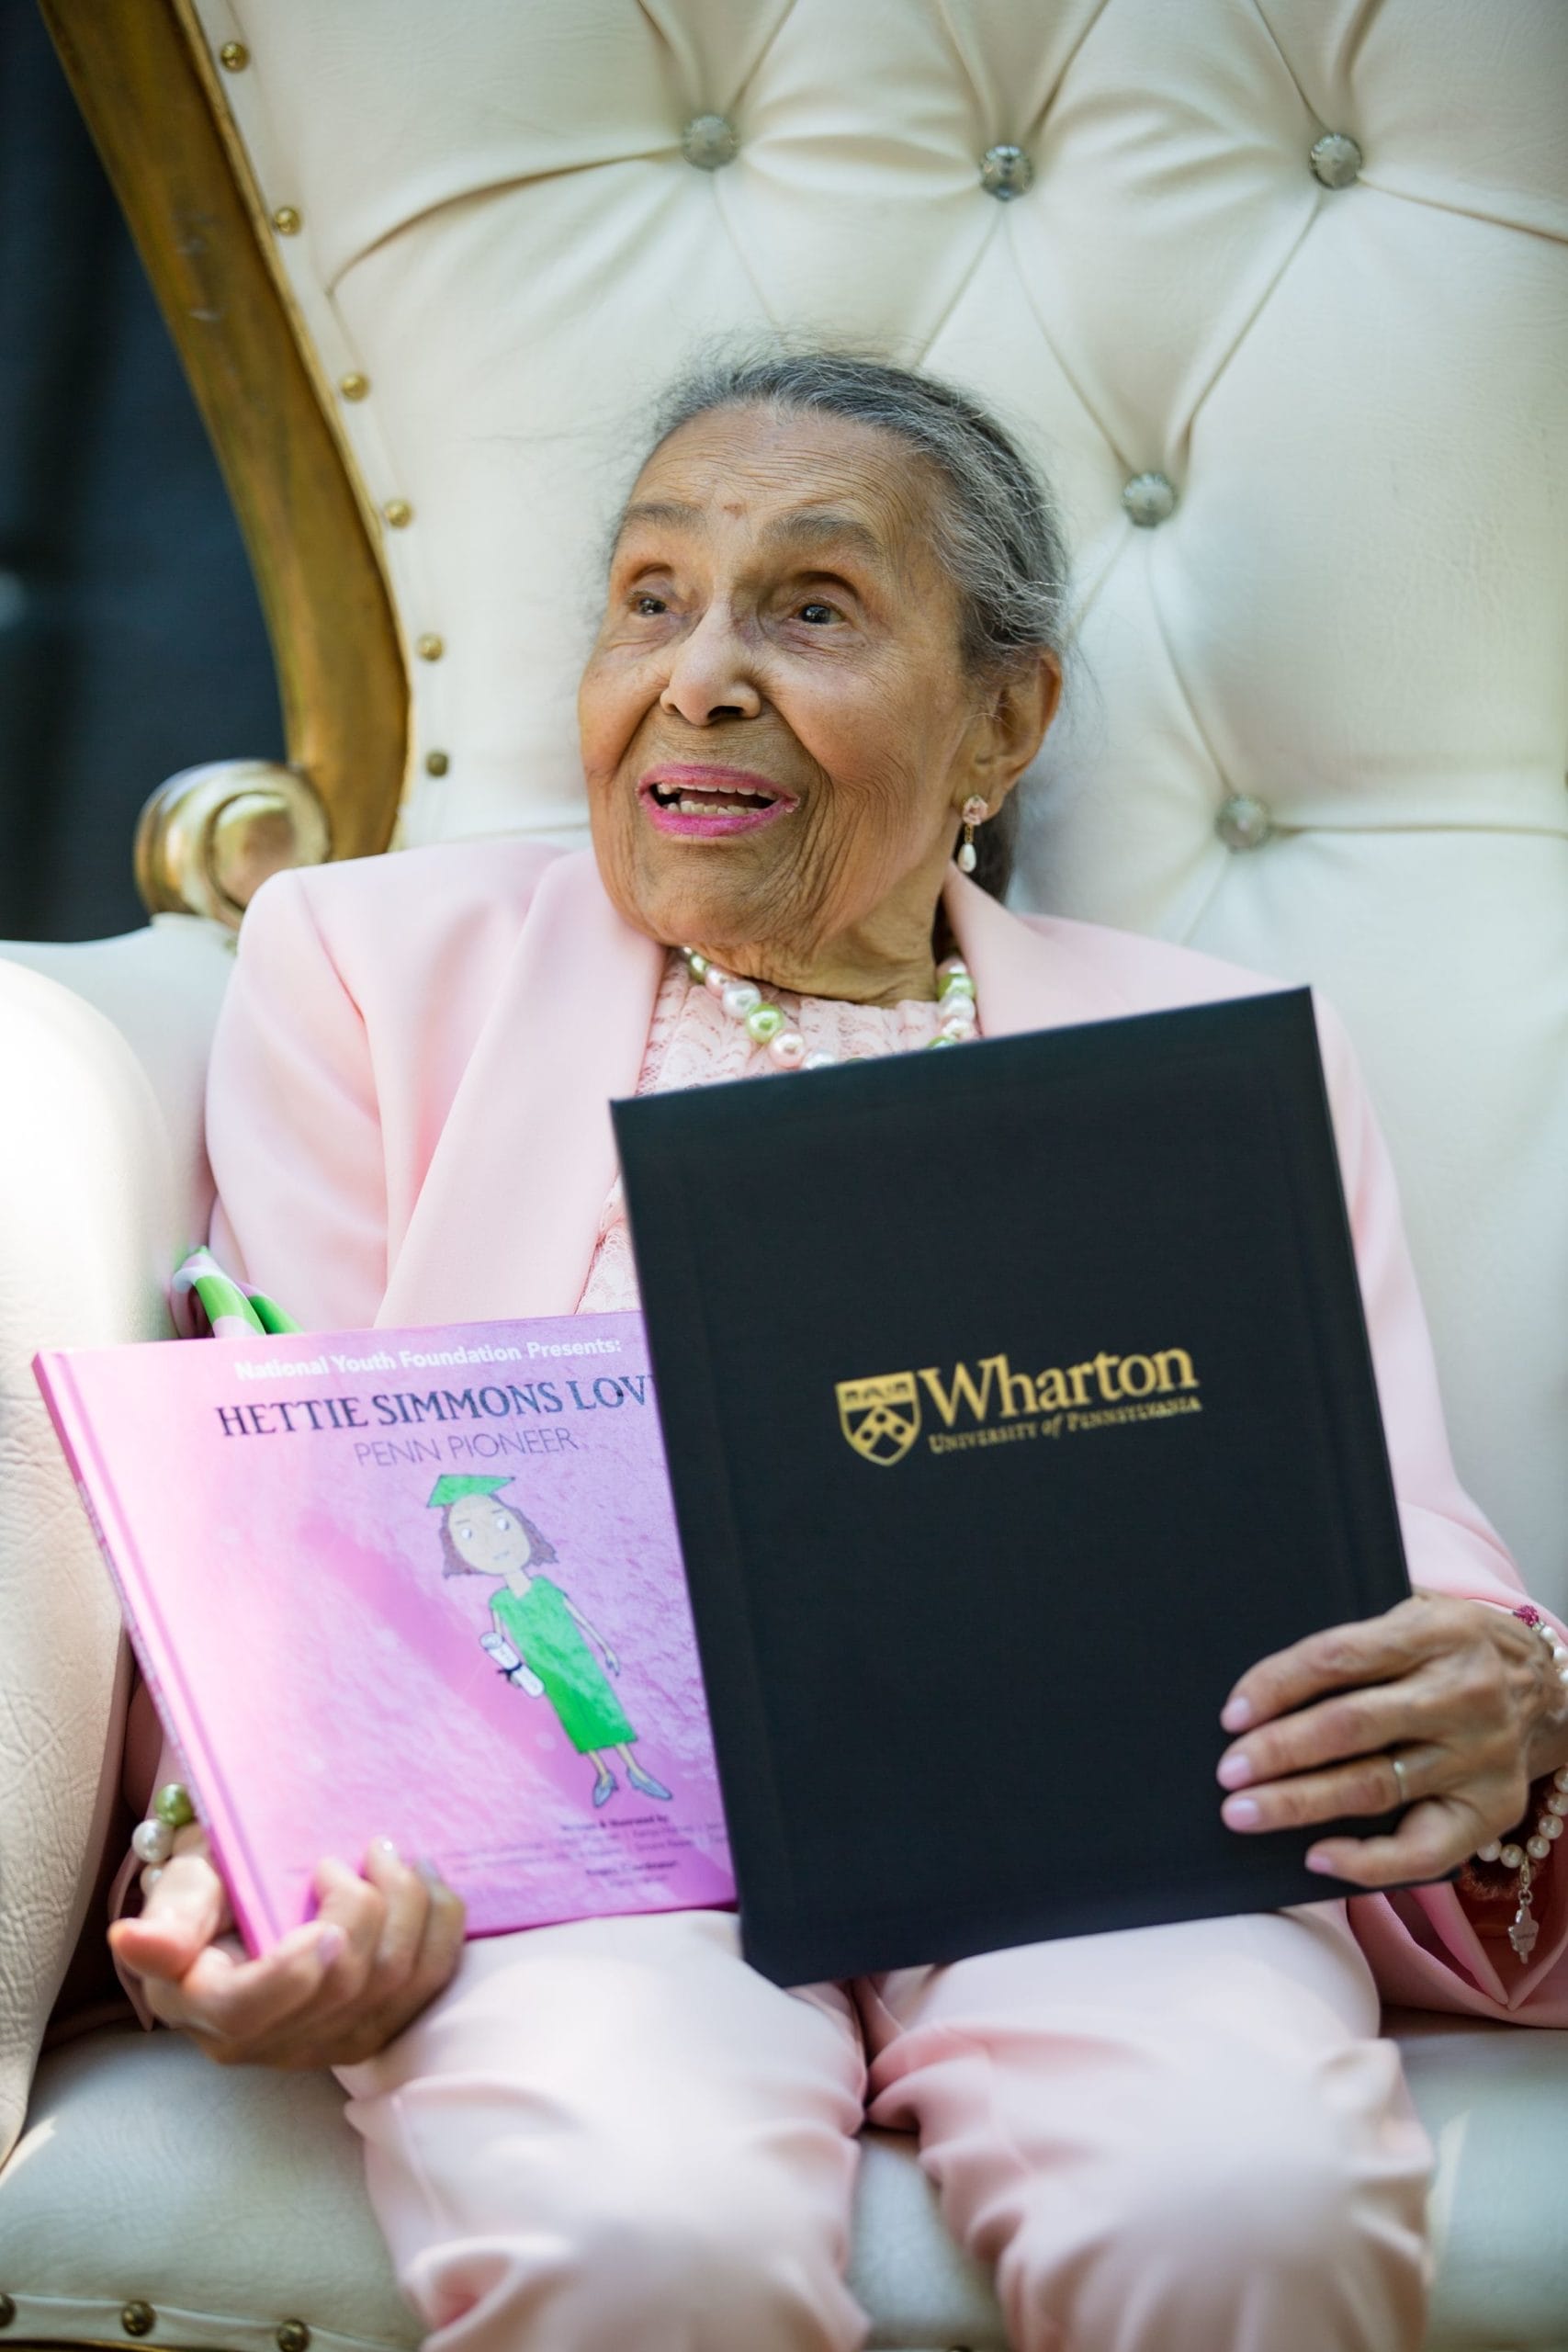 Hettie Simmons Love holds book and Penn Pioneer certificate